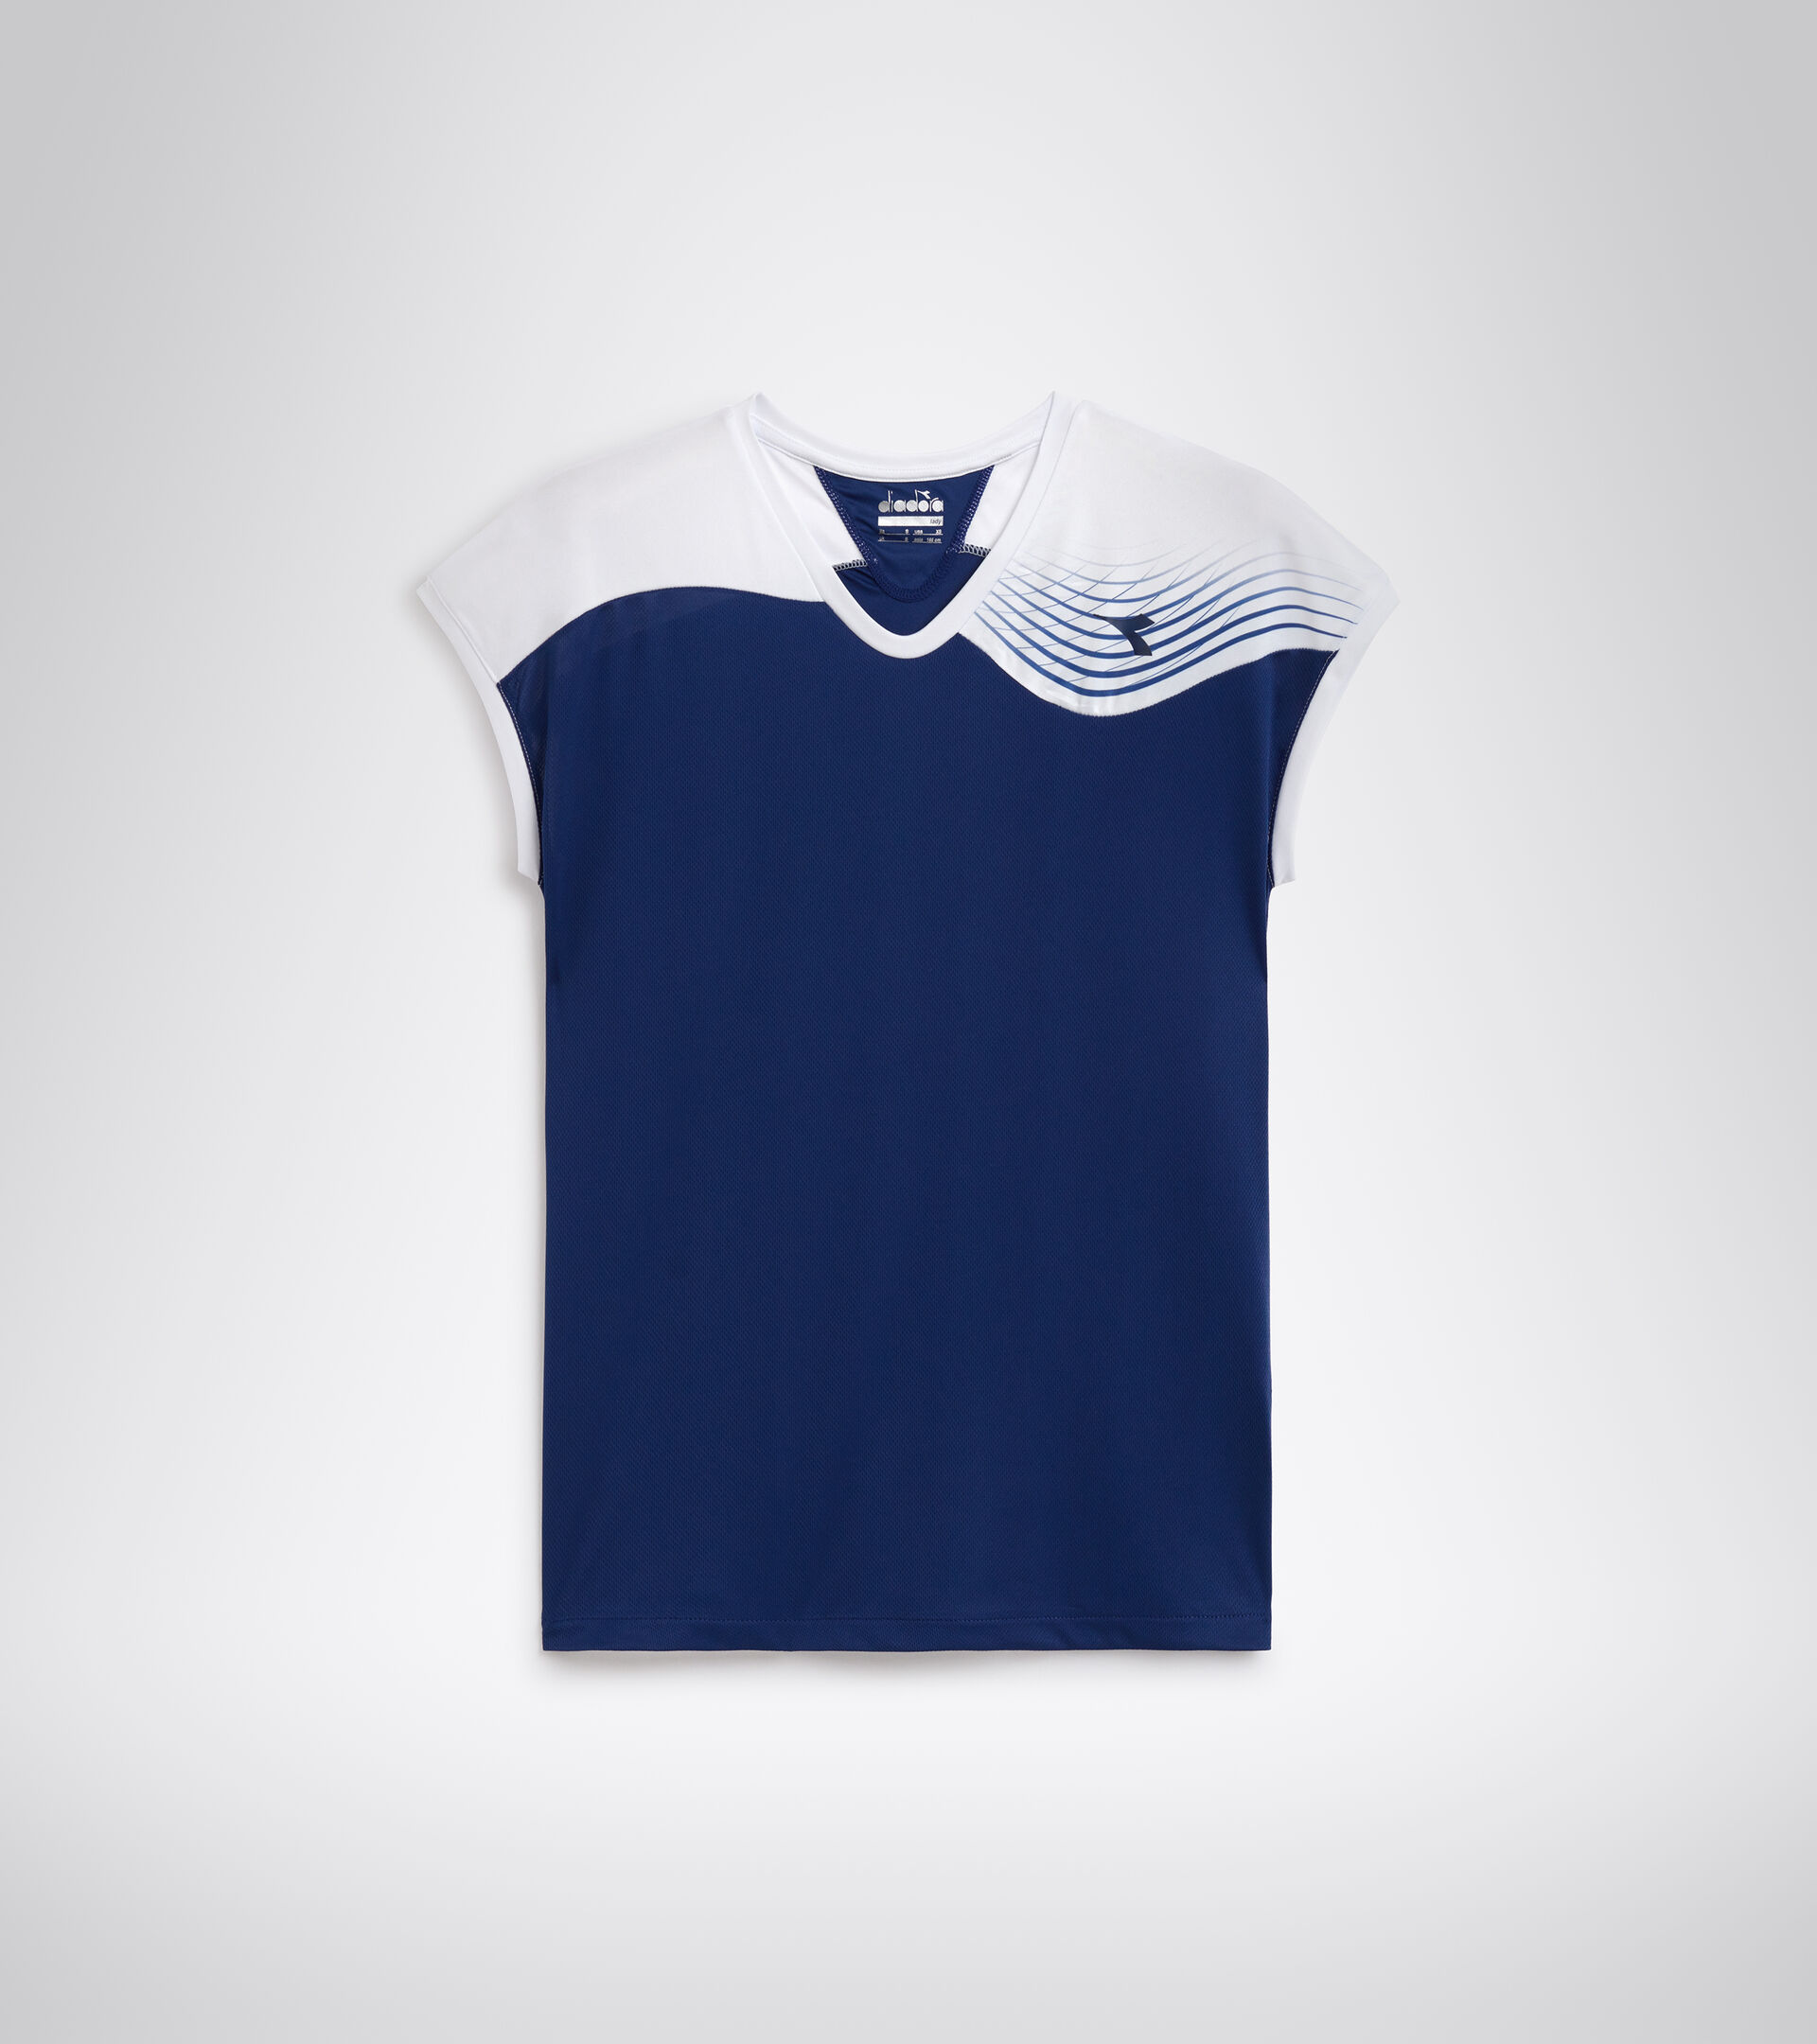 Camiseta de tenis - Mujer L. T-SHIRT COURT AZUL FINCA - Diadora